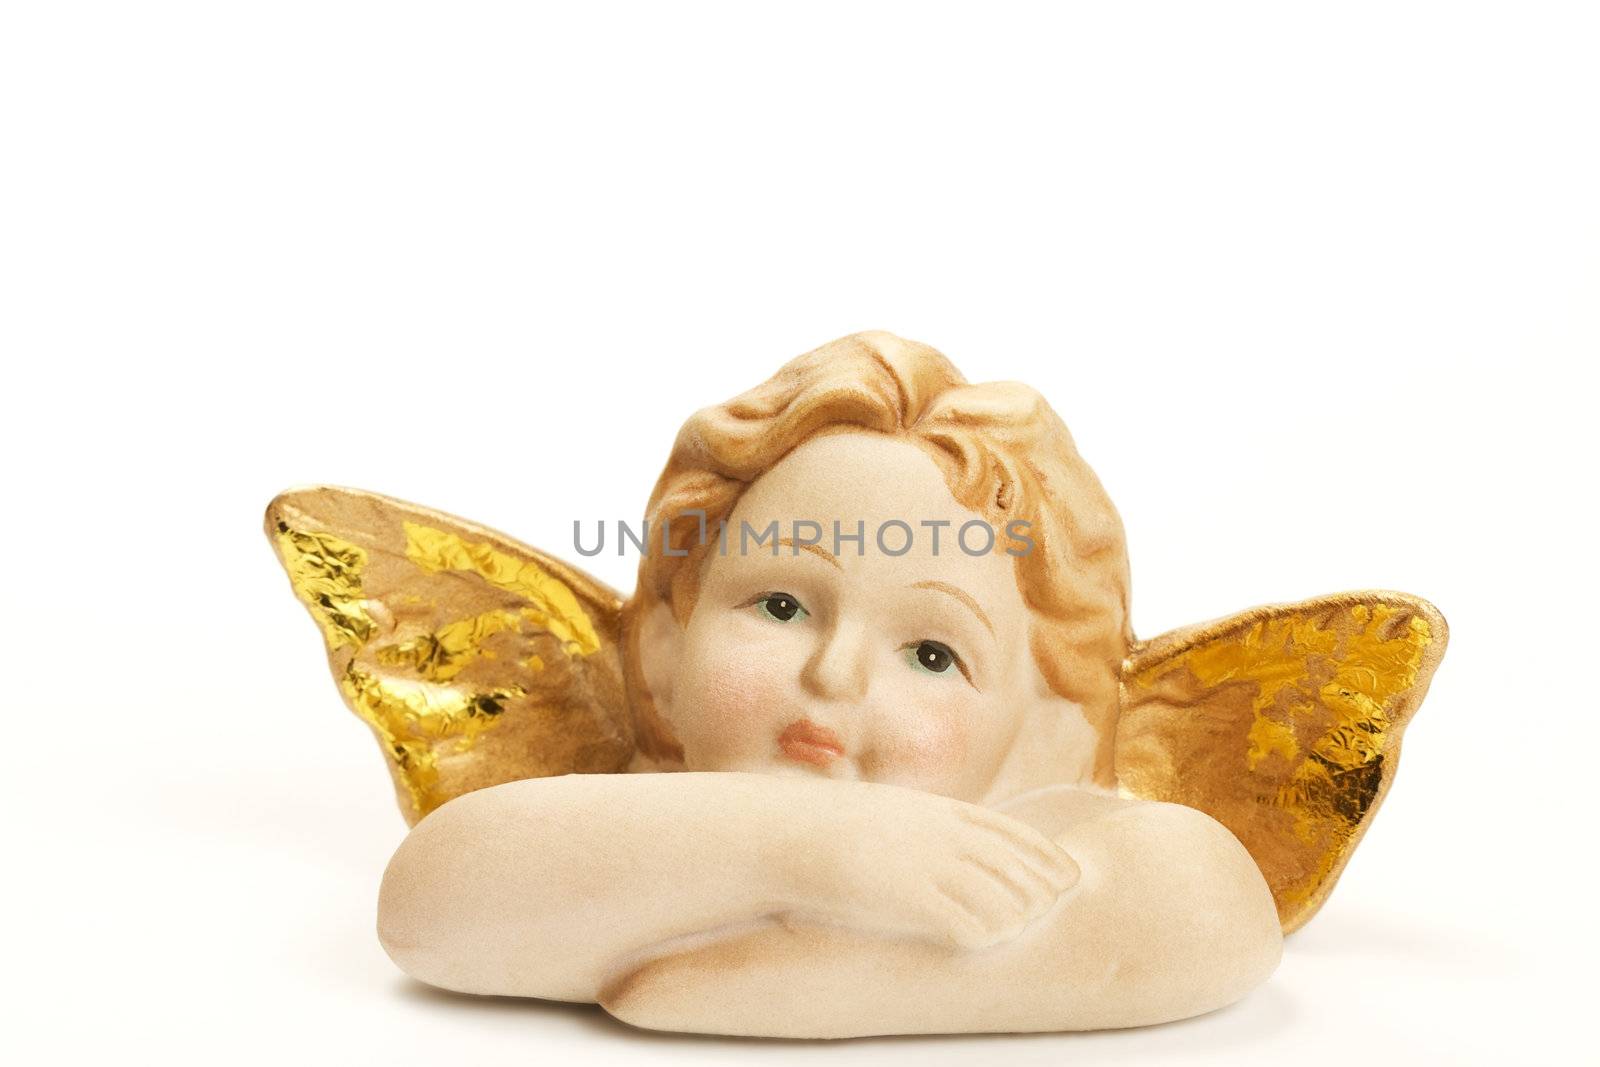 angel figurine upper part of body by RobStark